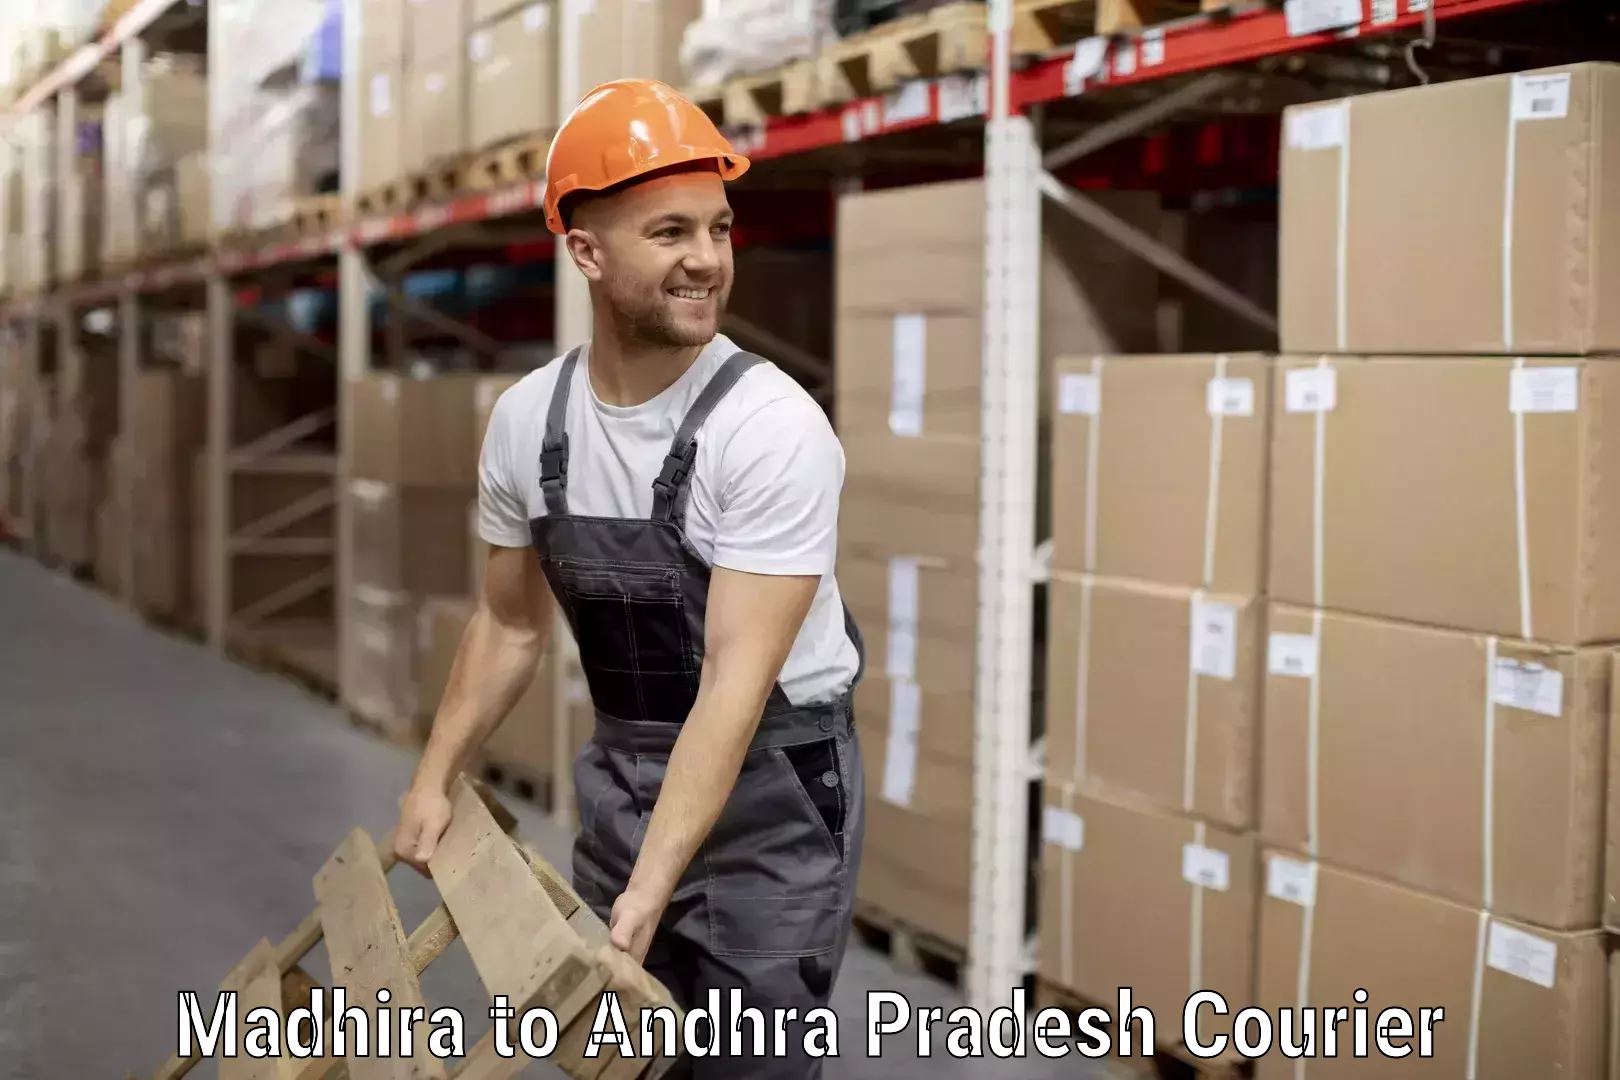 Luggage transport company Madhira to Andhra Pradesh